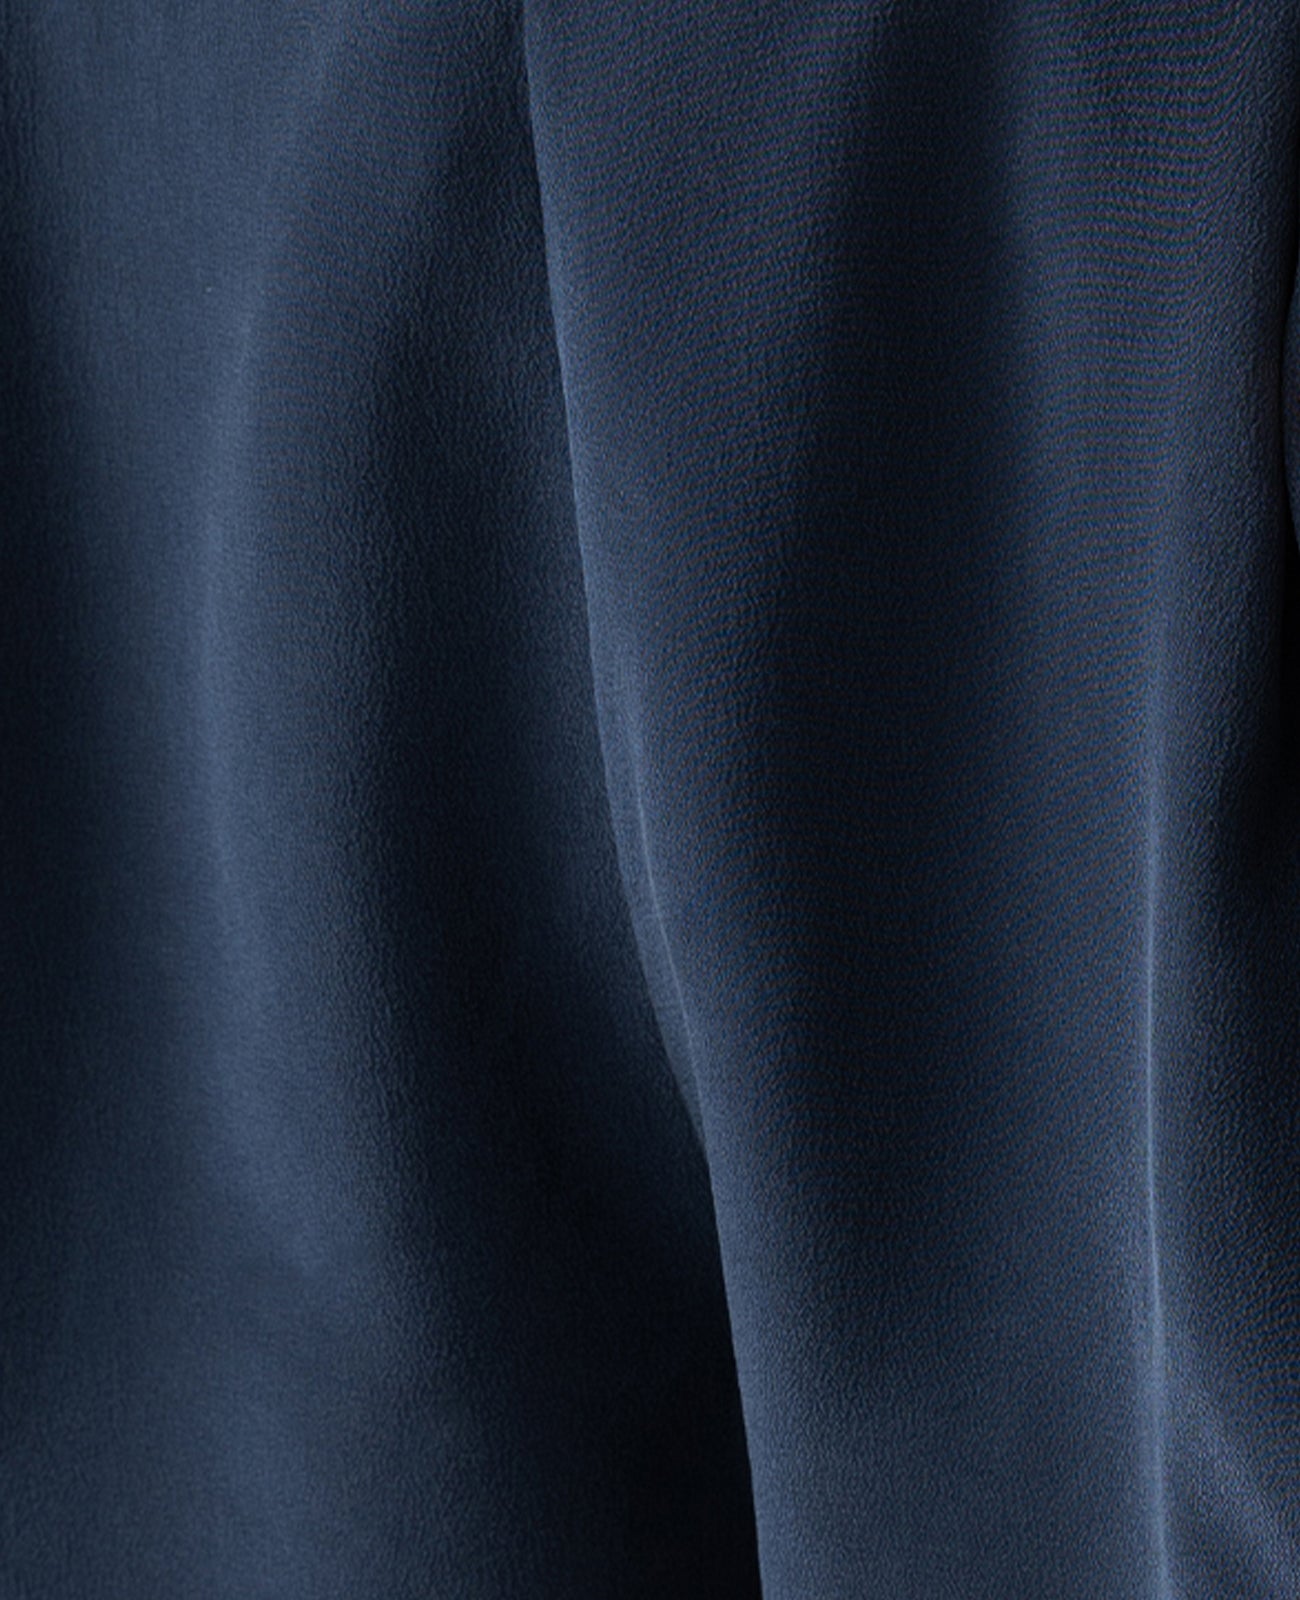 Silk Wrap Tank Dress in NAVY | GRANA #color_navy